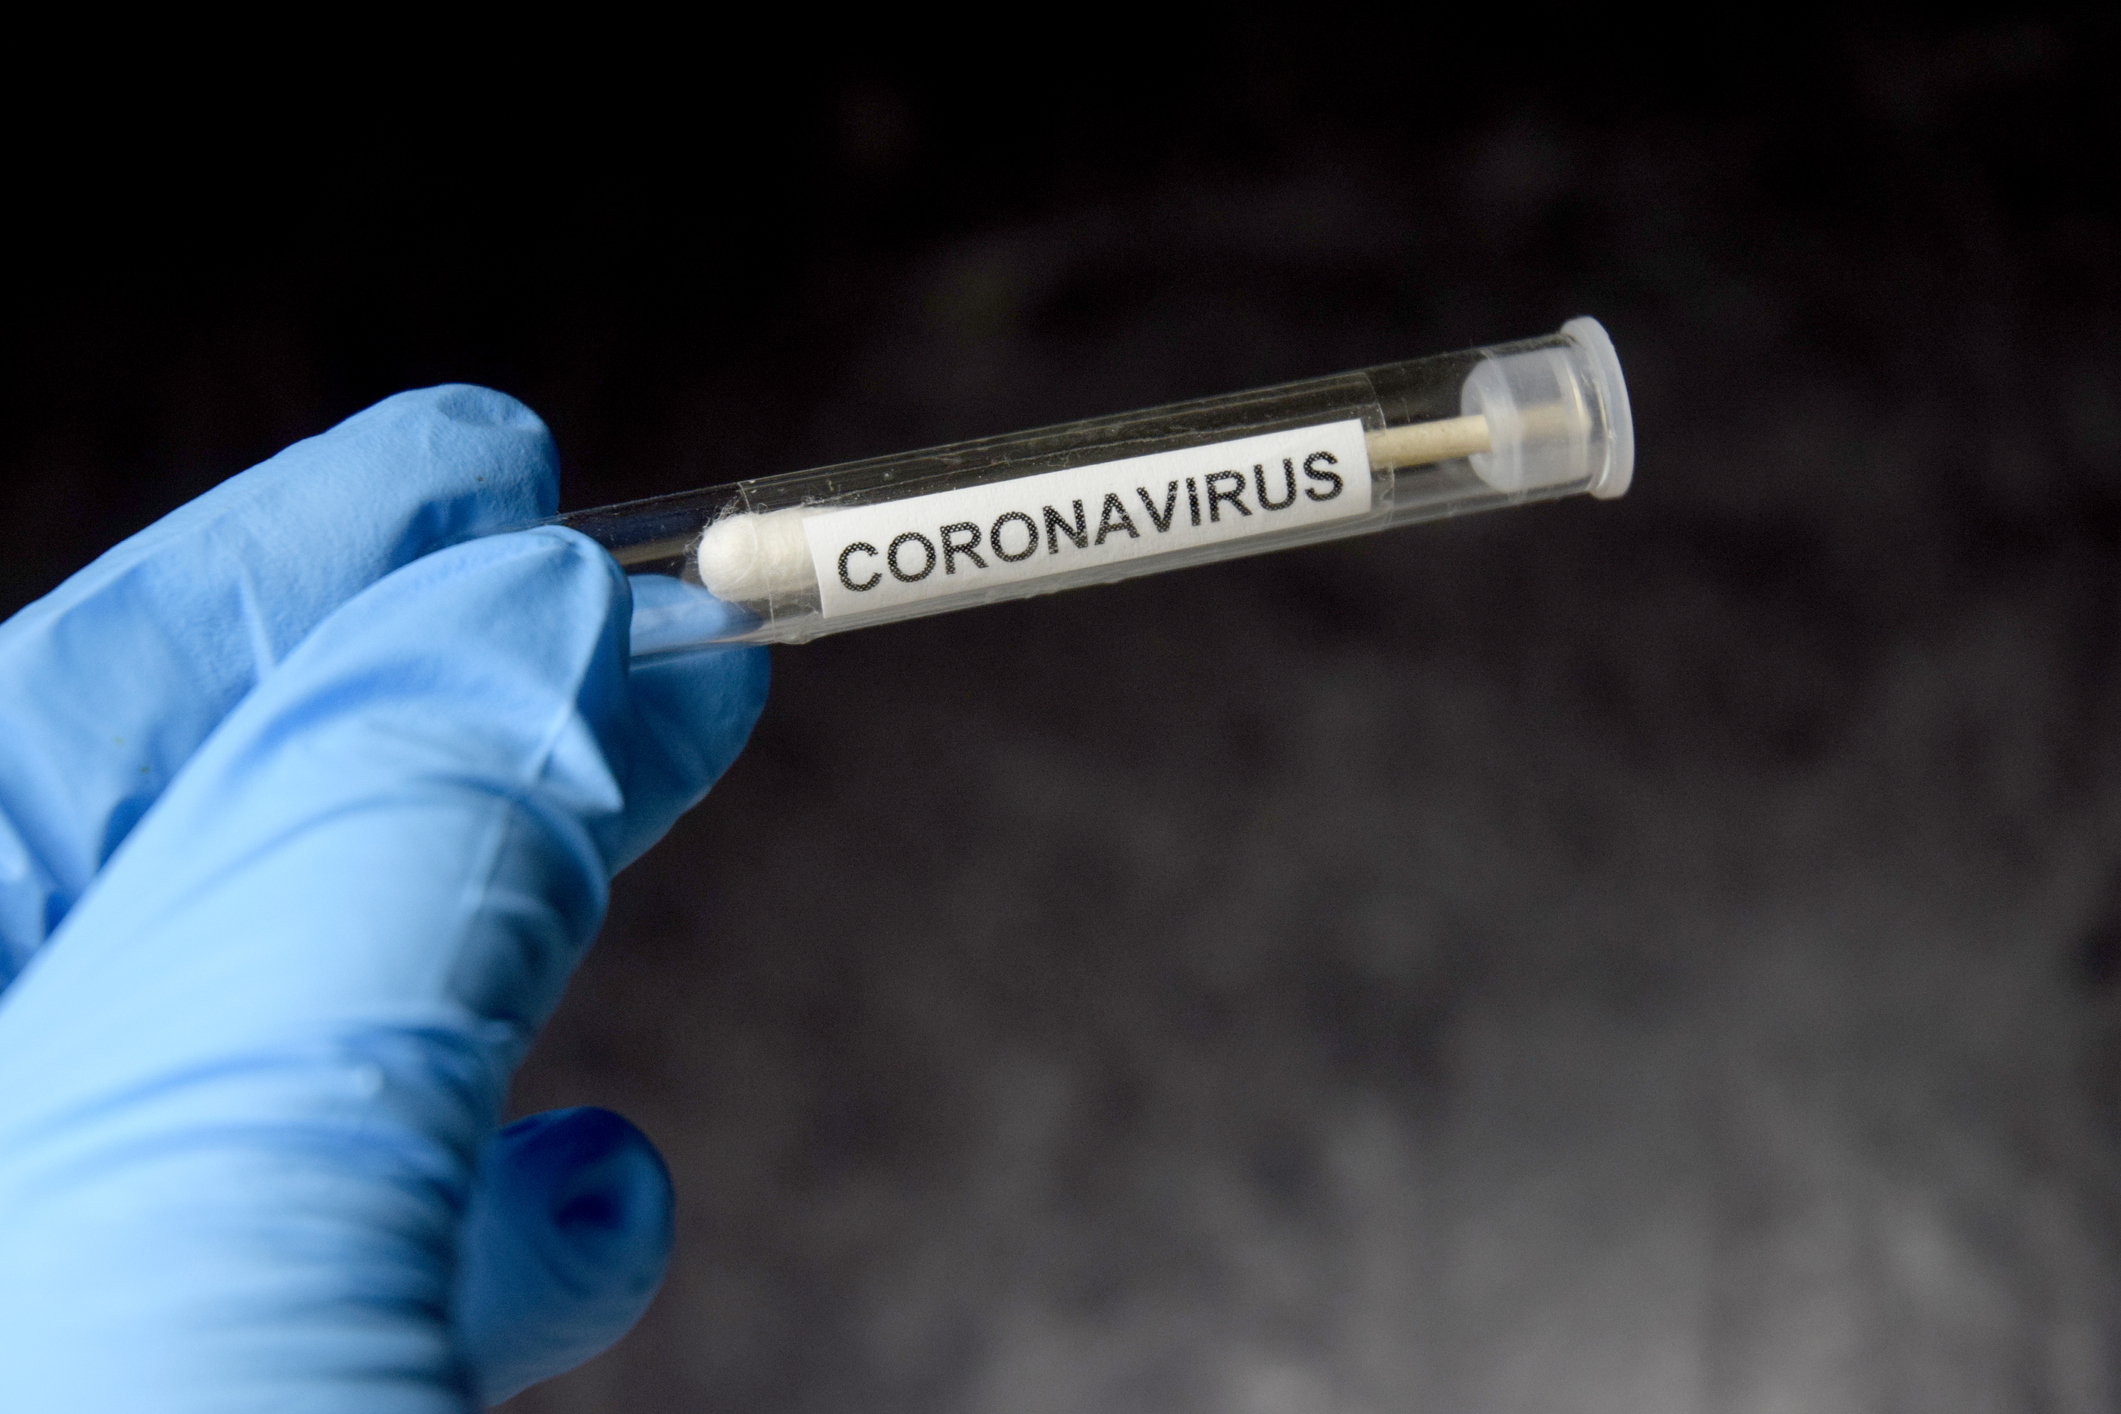 Dental Lab 3D printing for coronavirus supplies